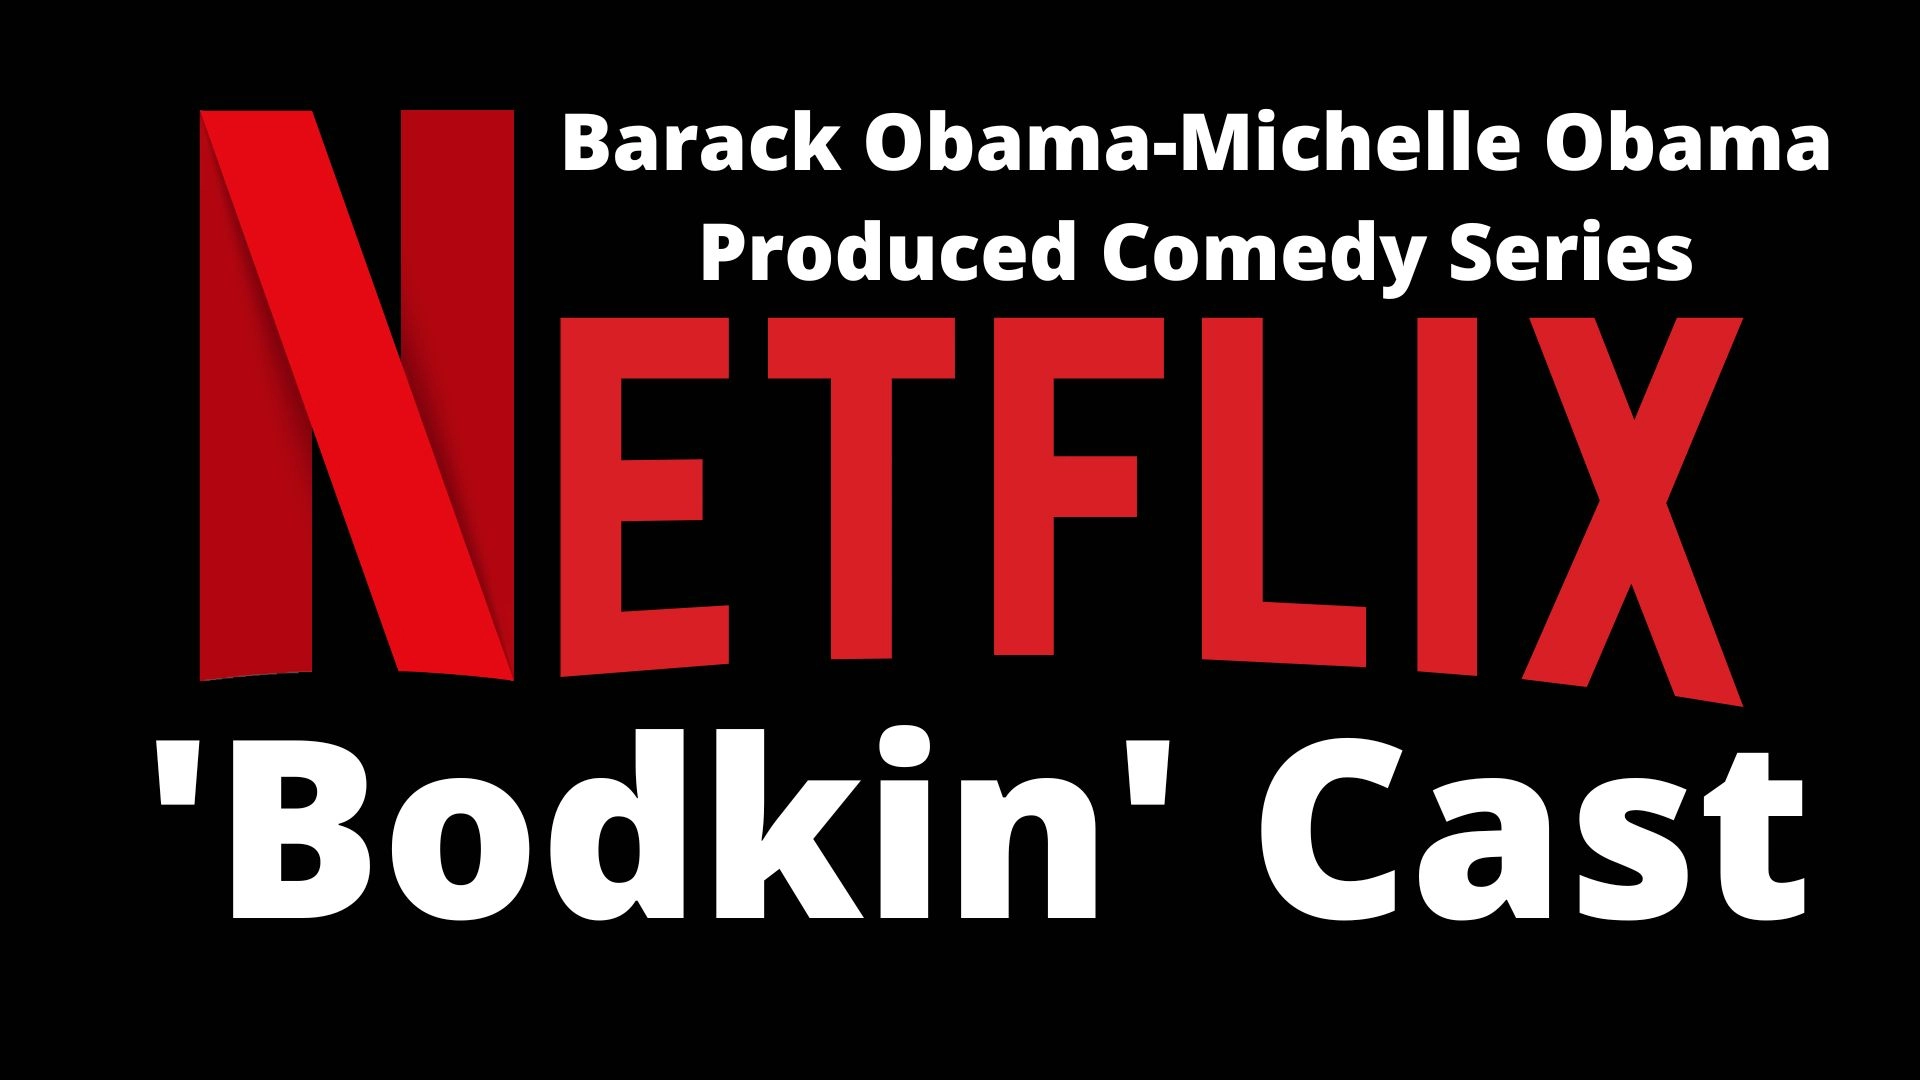 Barack Obama-Produced Comedy Series 'Bodkin' Cast